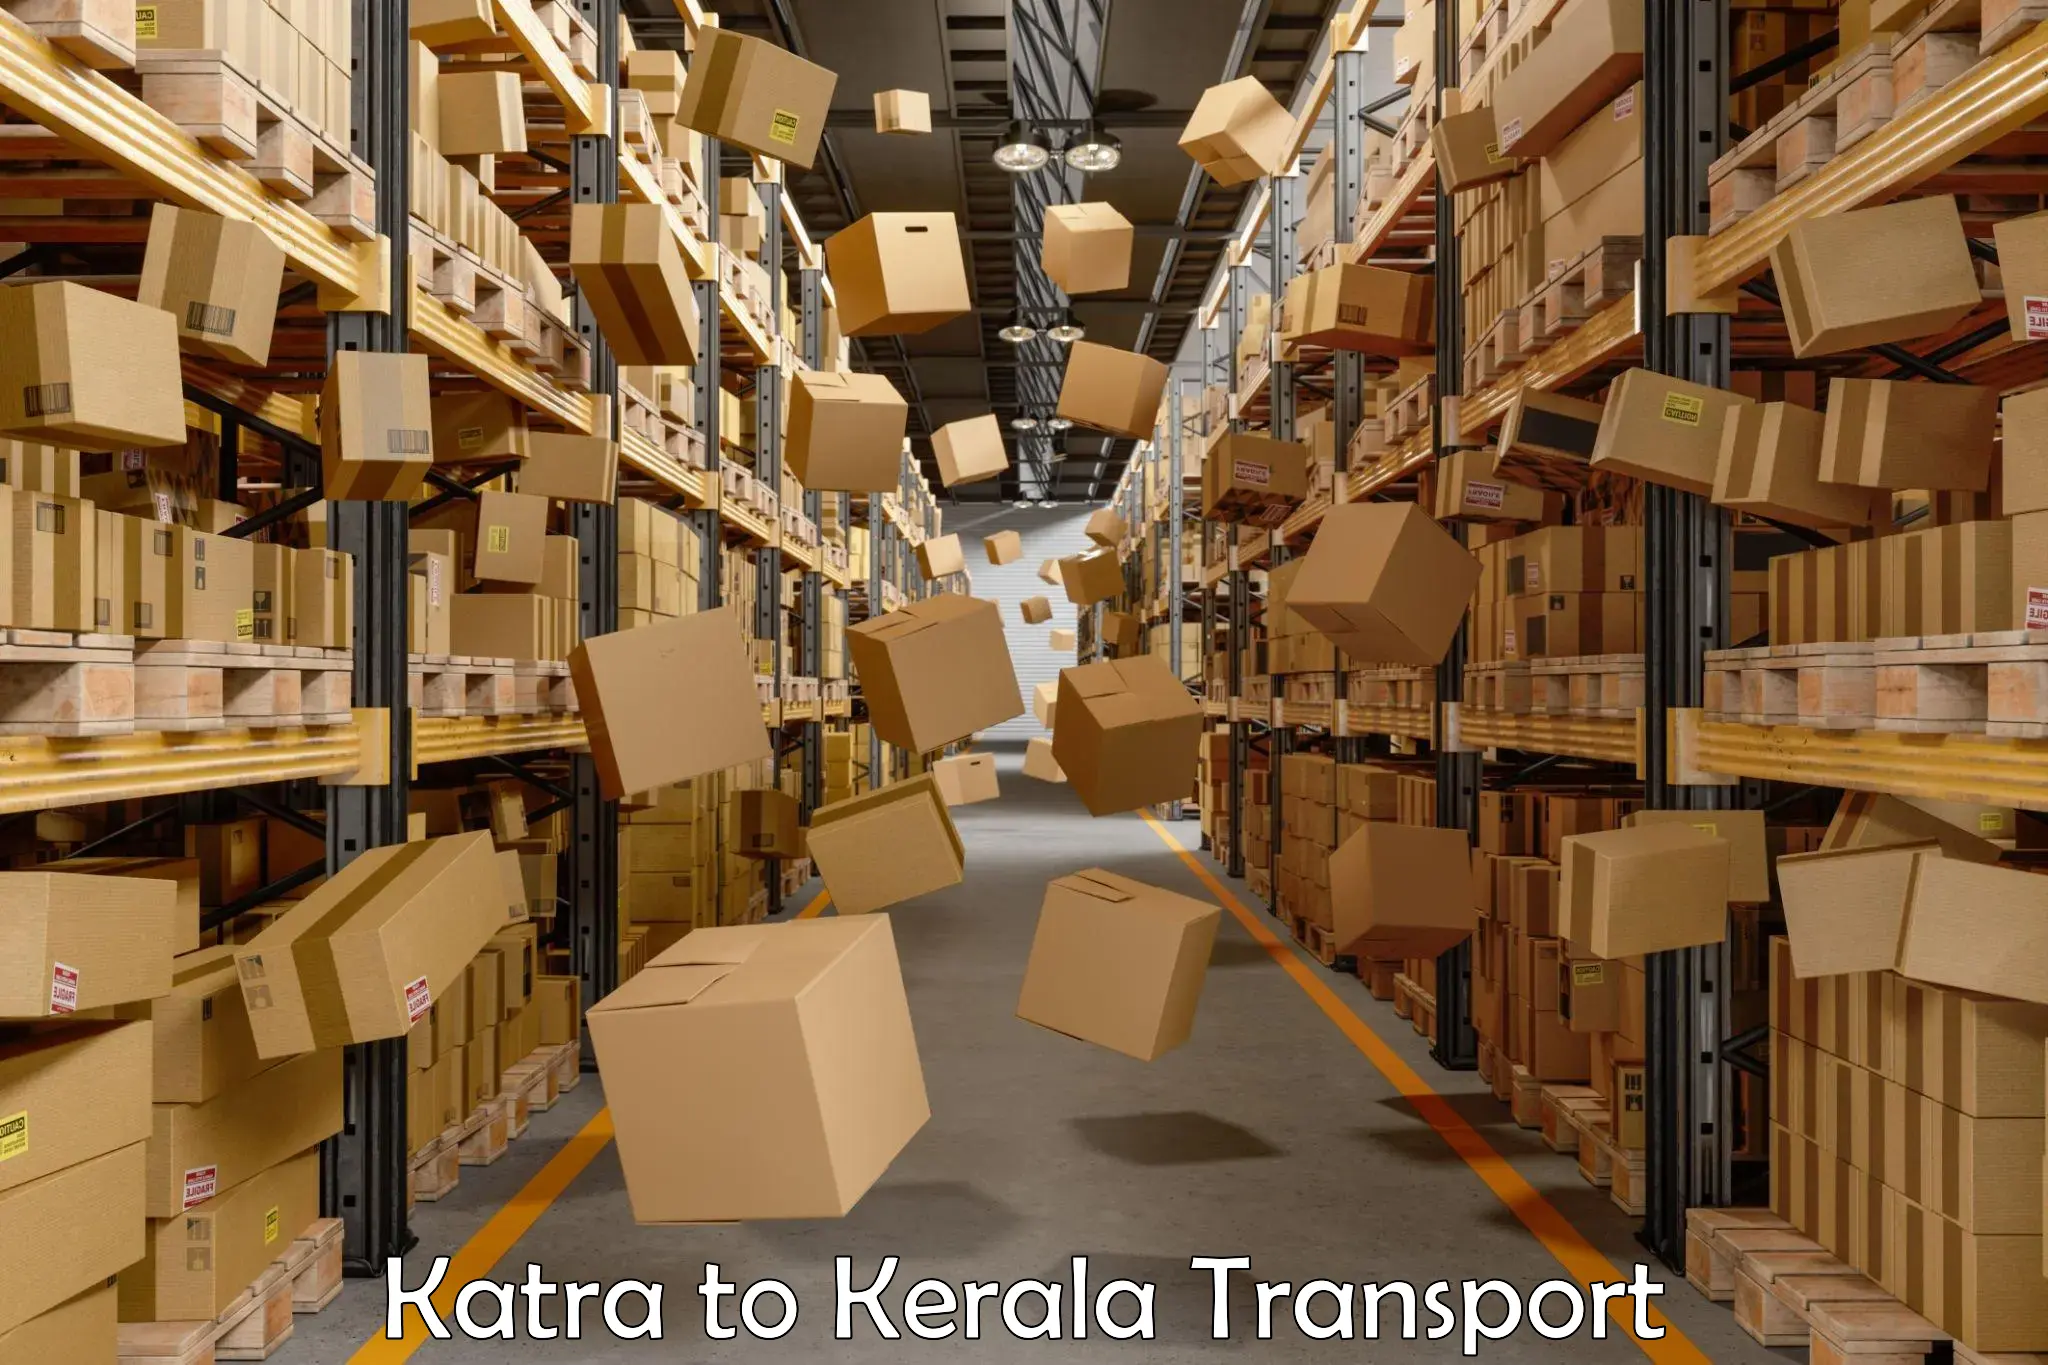 Daily parcel service transport Katra to Kattappana